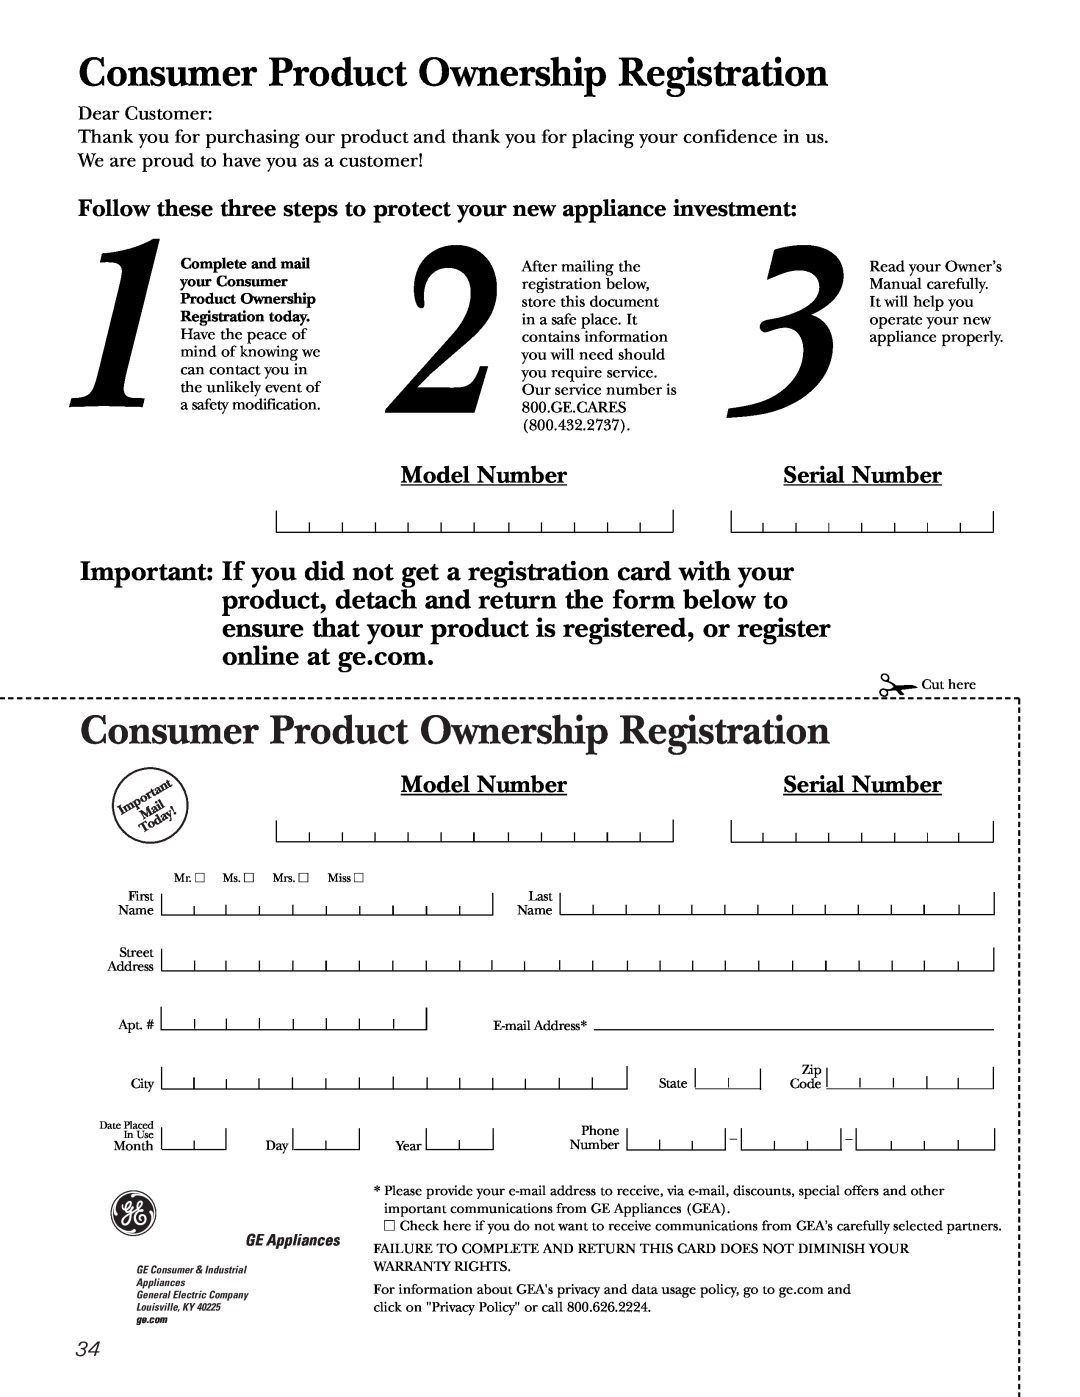 GE Monogram 23 Model Number, Serial Number, Consumer Product Ownership Registration, GE Appliances 